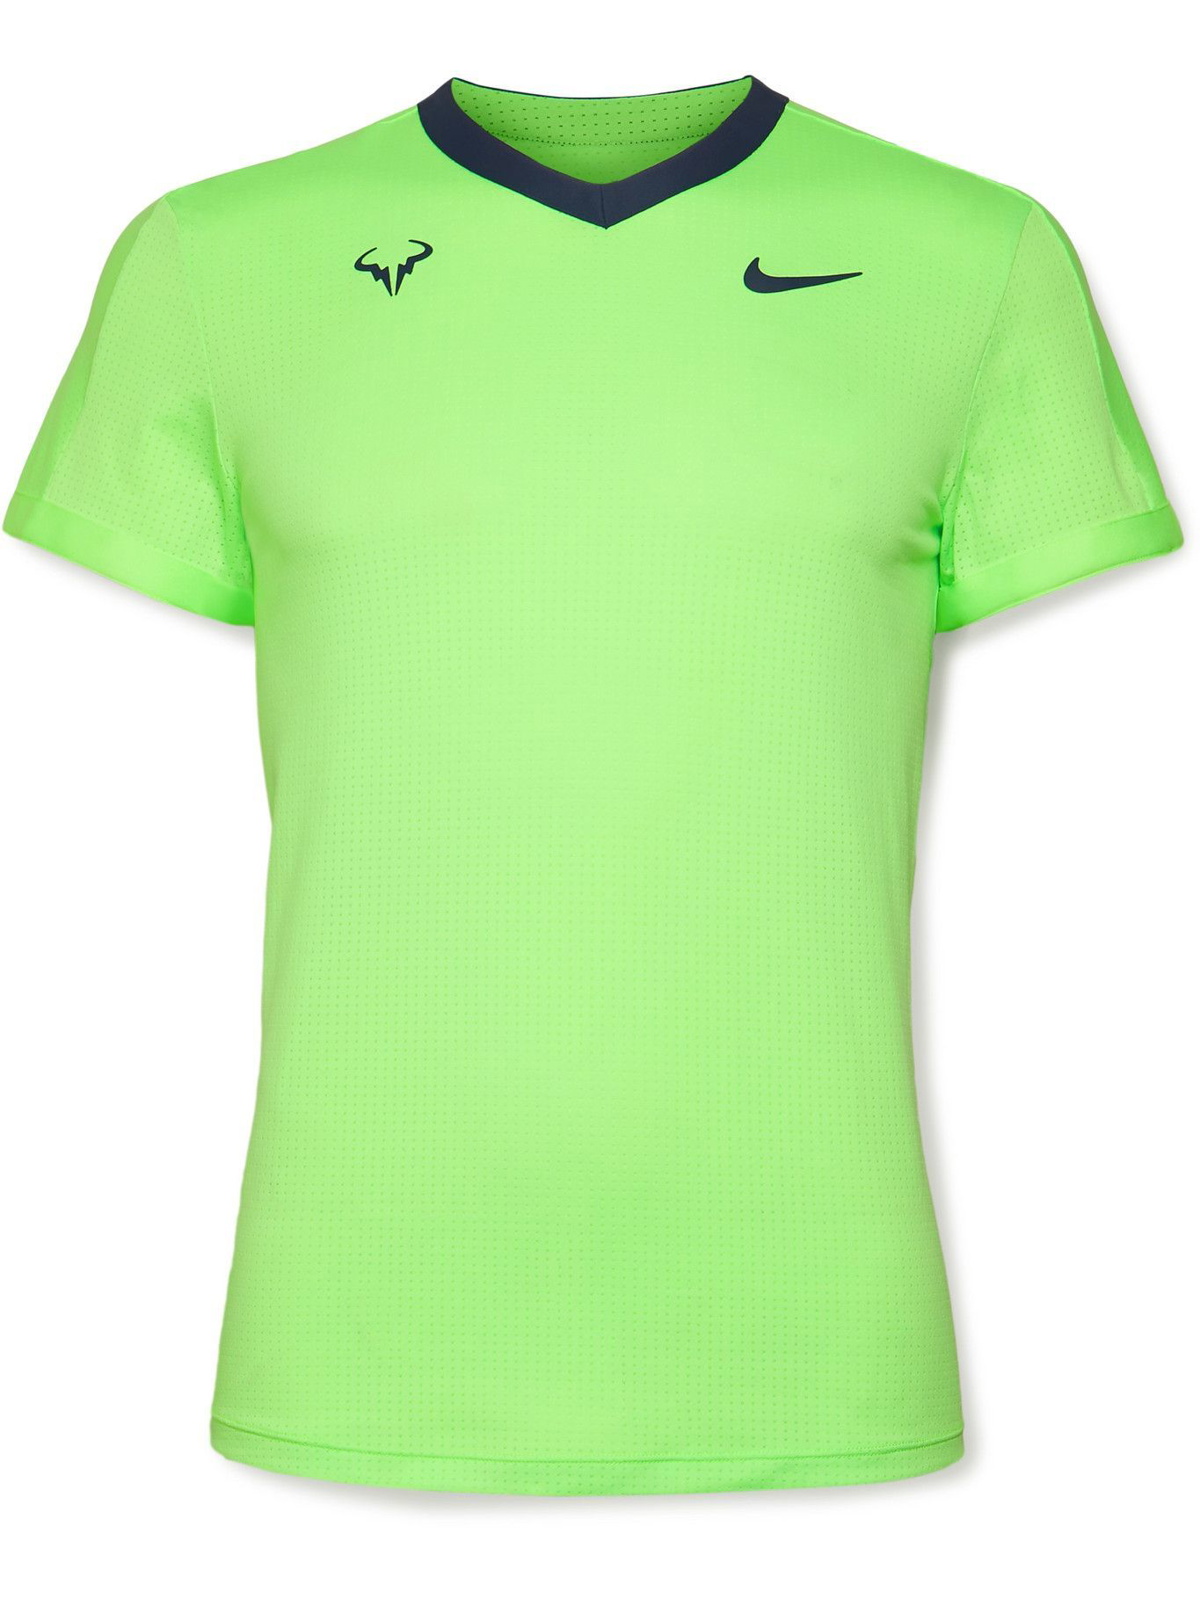 Nike Tennis - NikeCourt Dri-FIT ADV Rafa Tennis T-Shirt - Green Nike Tennis